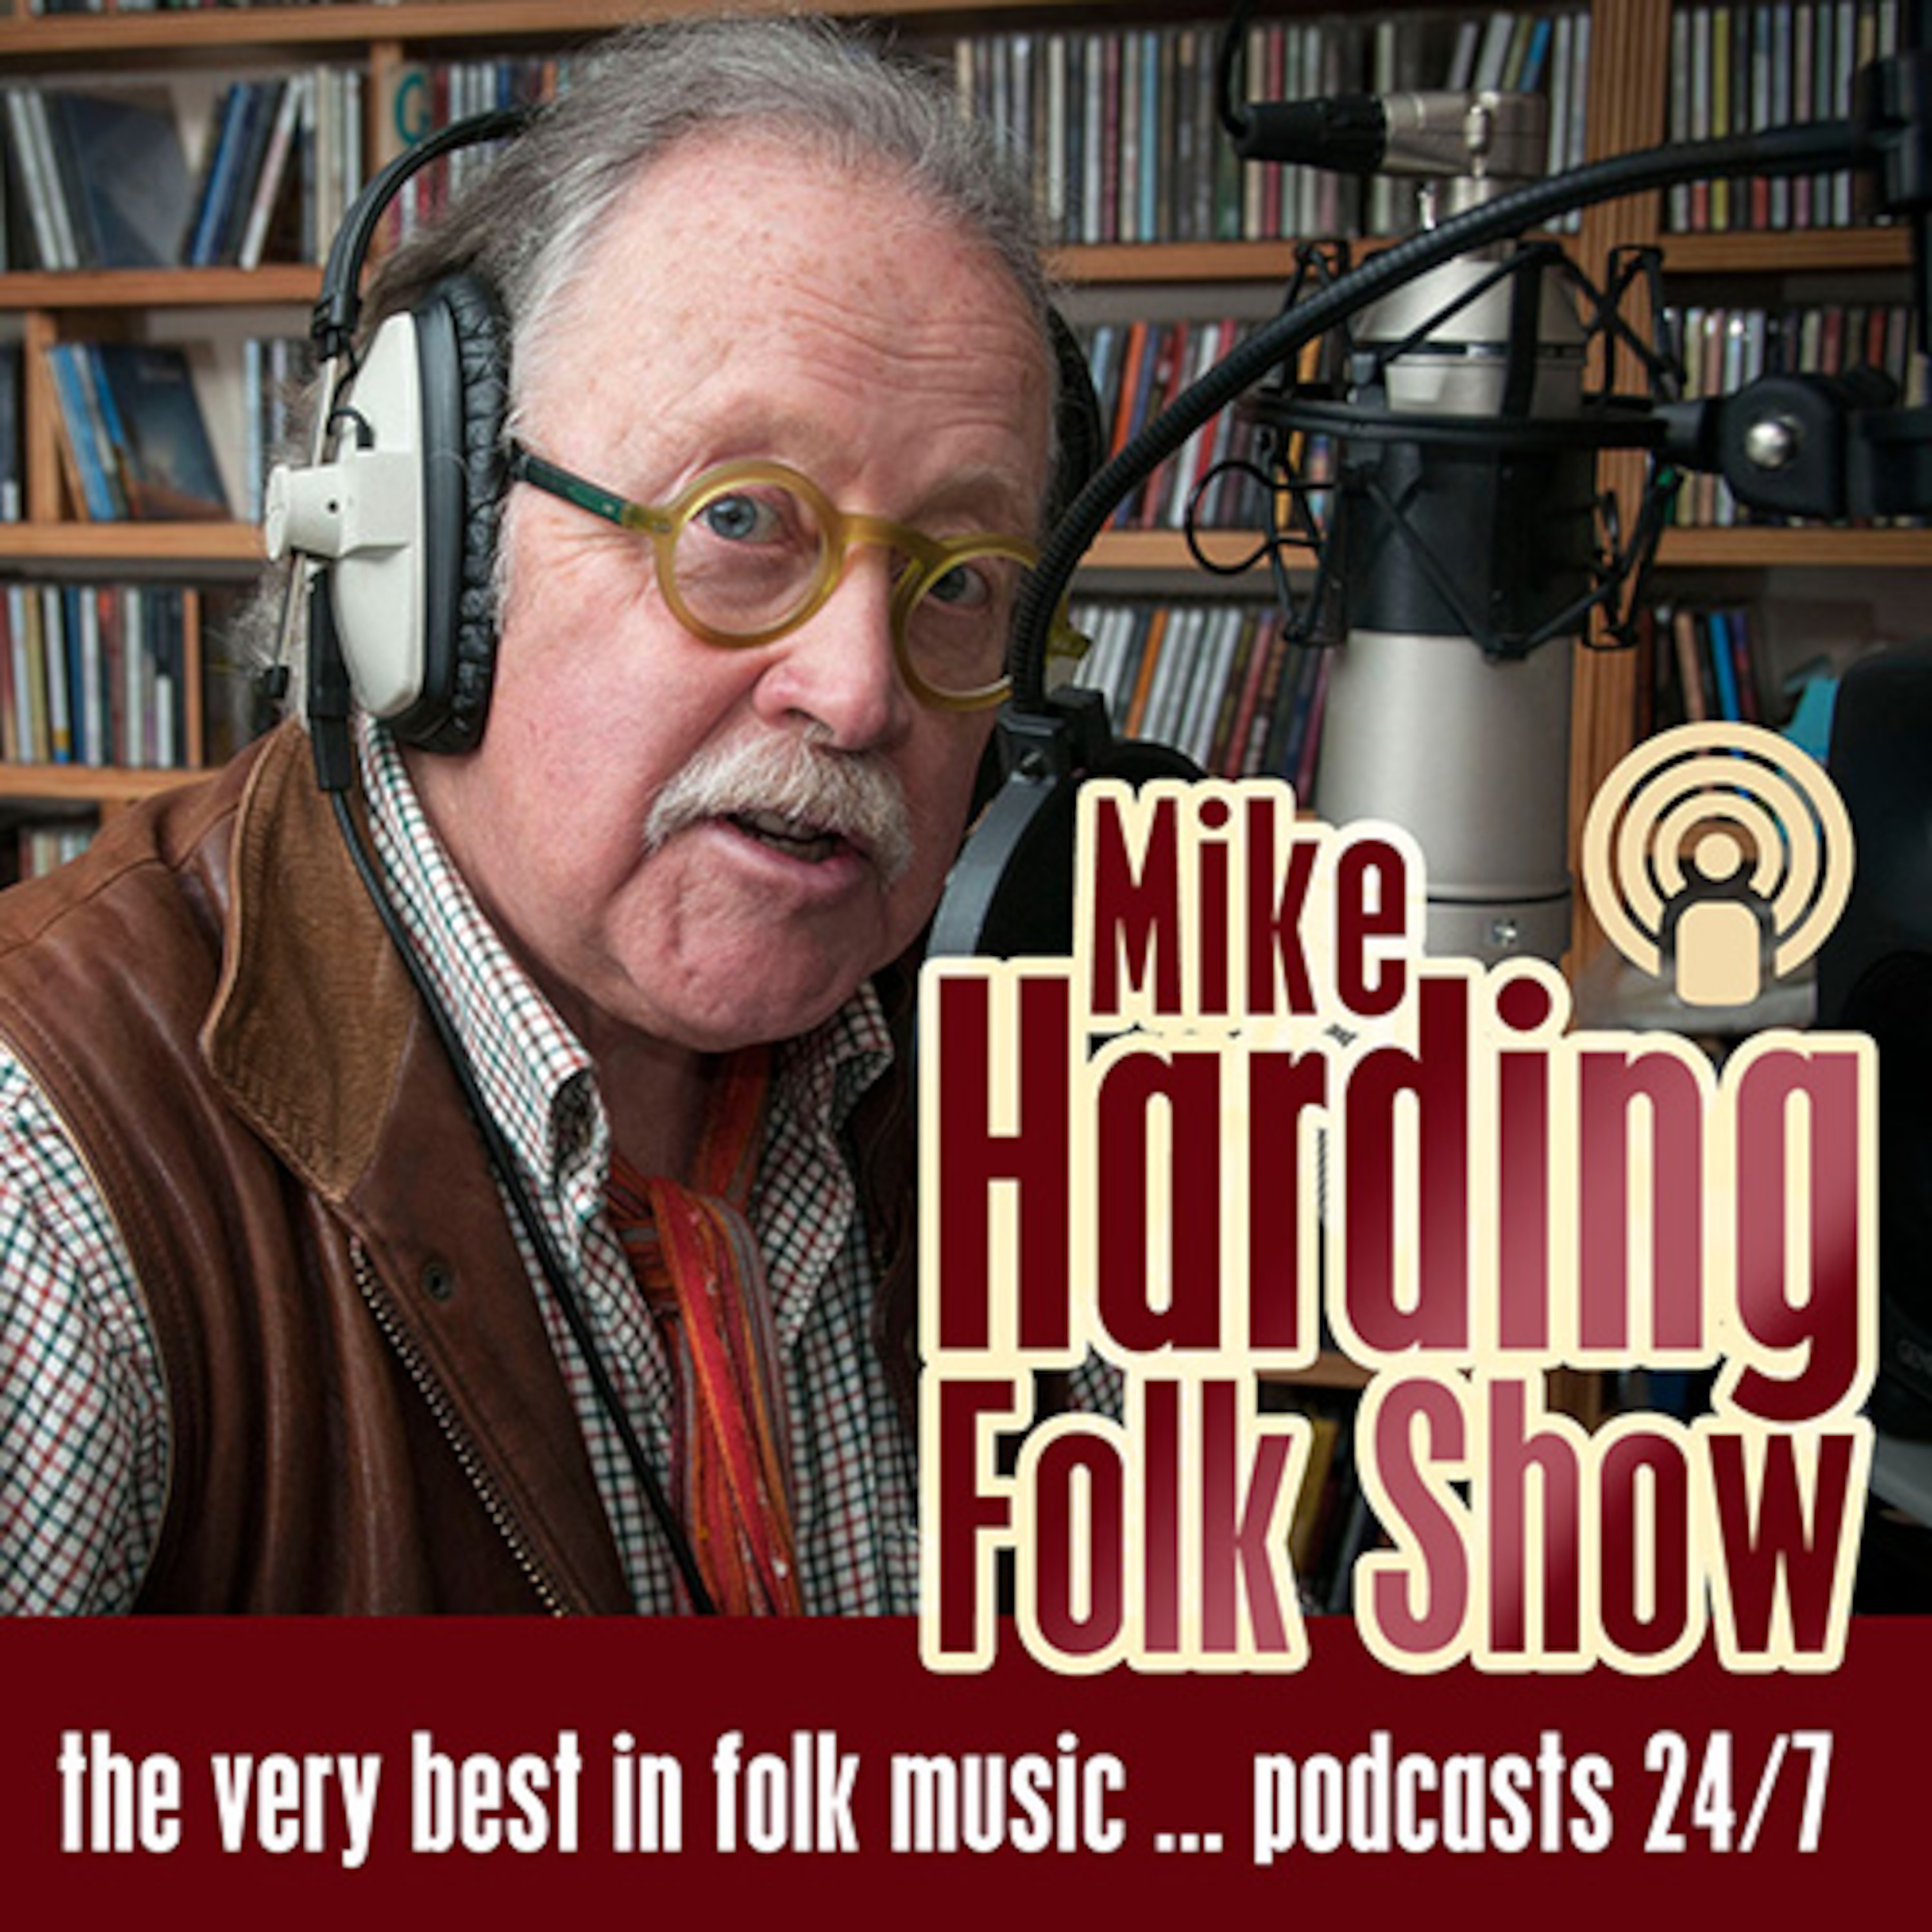 Mike Harding Folk Show 127